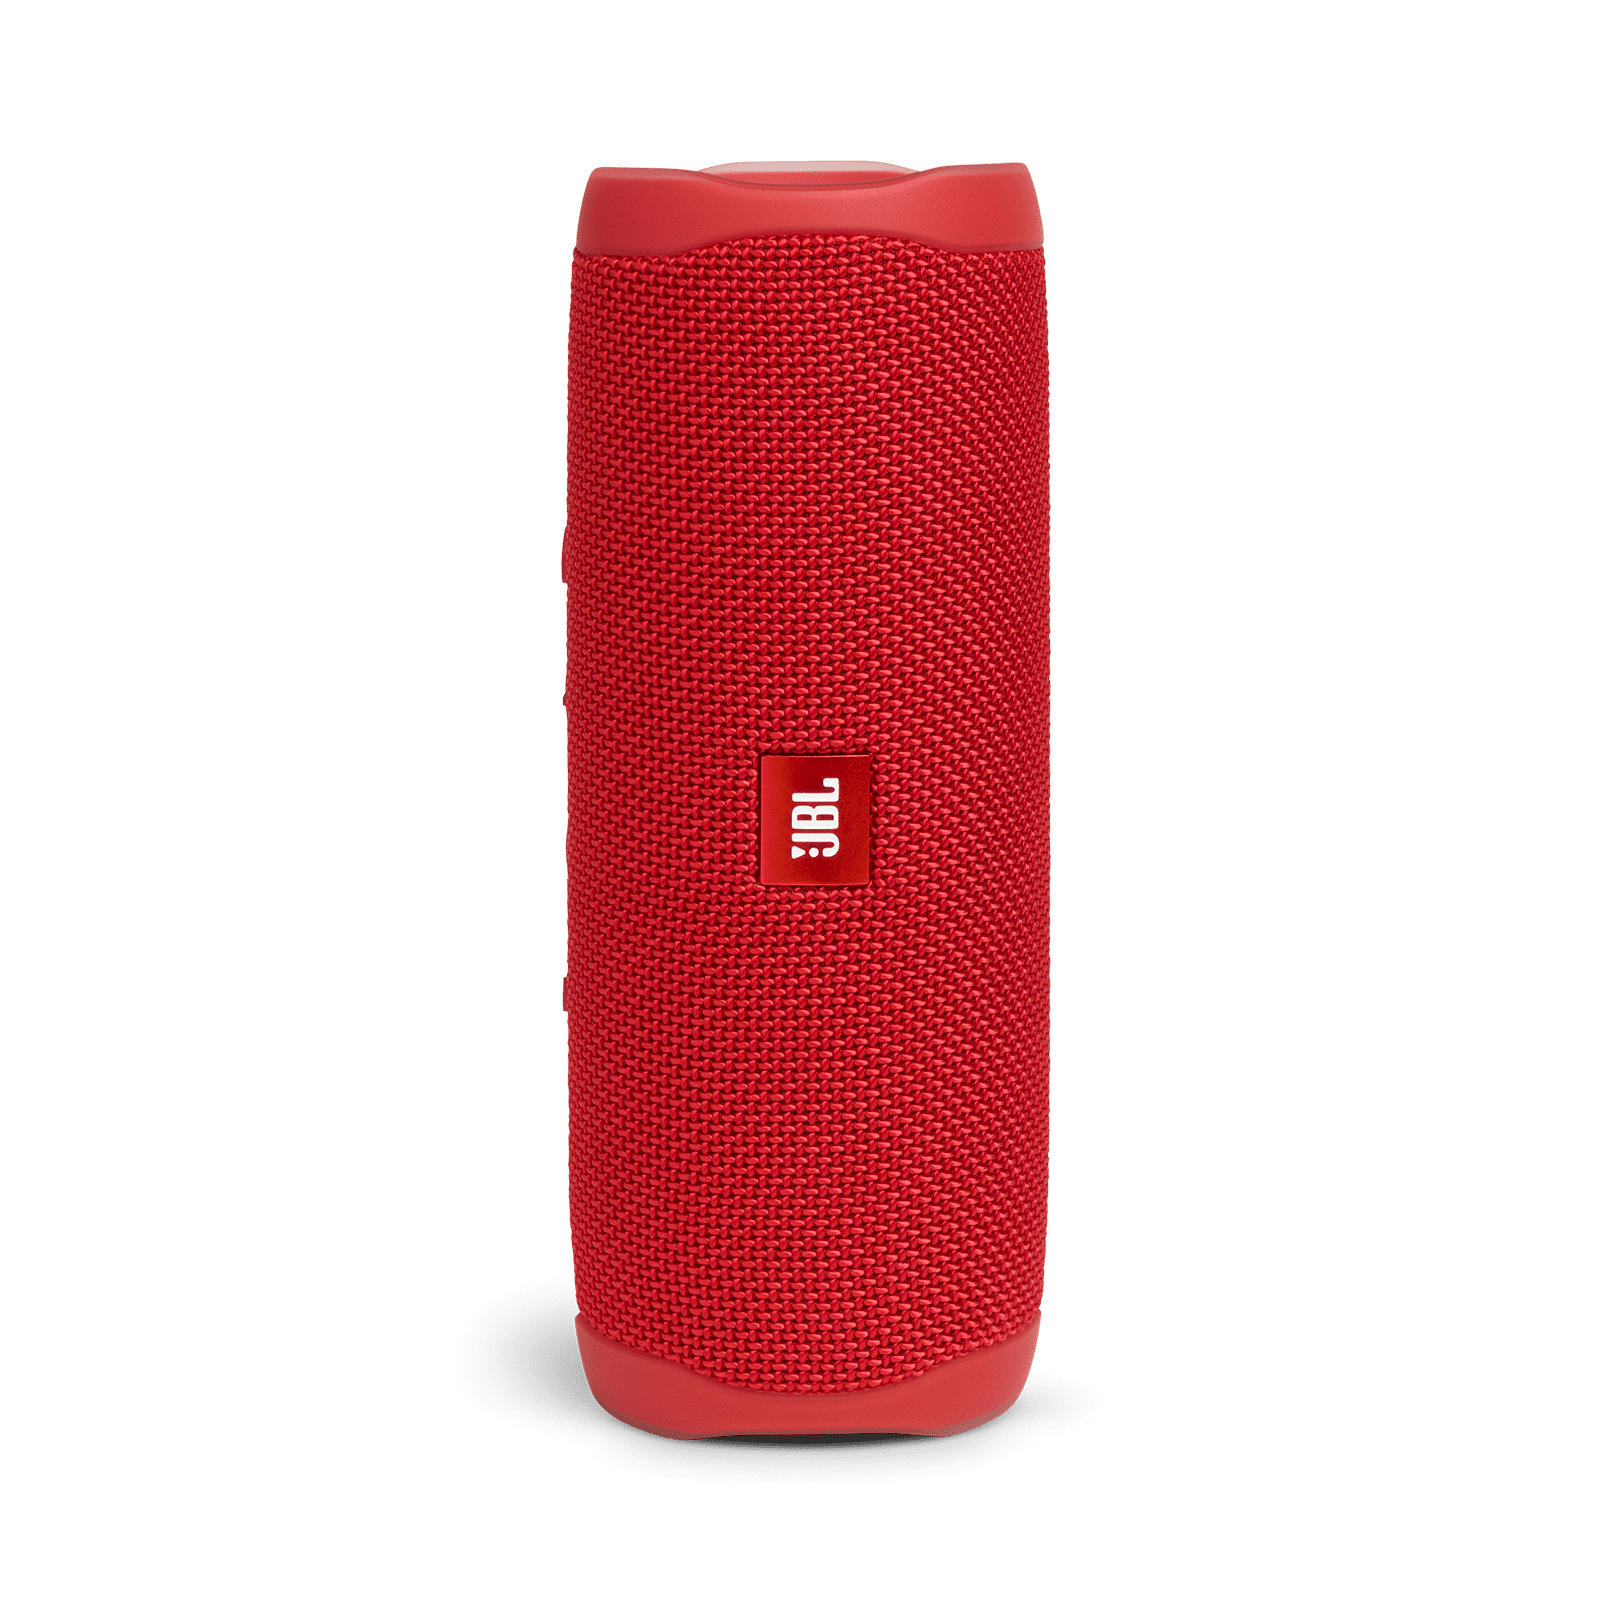 voldgrav nedenunder cerebrum JBL Flip 5 Portable Waterproof Wireless Bluetooth Speaker - Black -  Walmart.com